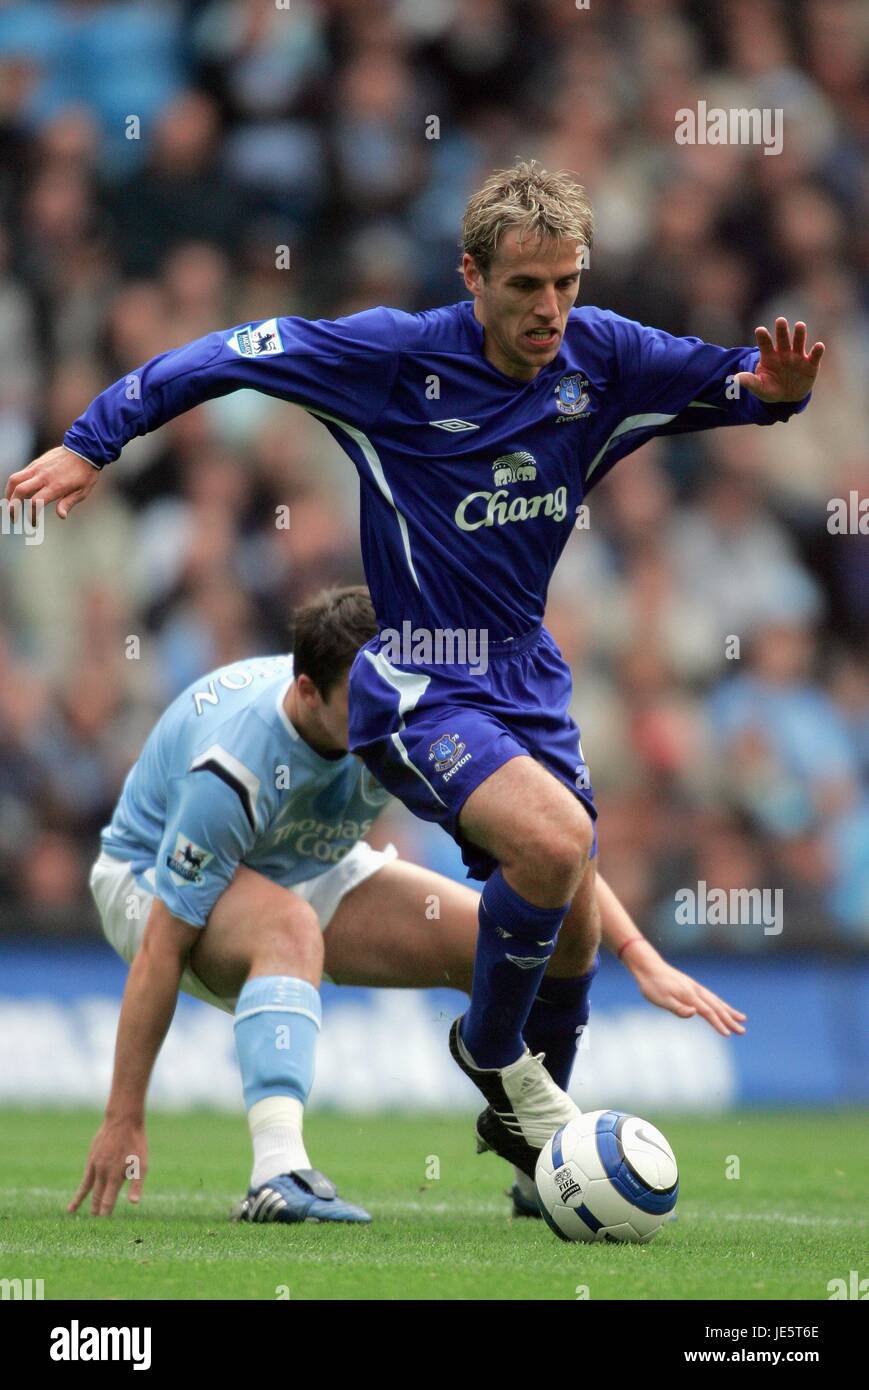 JOEY BARTON & PHILIP NEVILLE MANCHESTER CITY V Everton FC CITY OF MANCHESTER STADIUM MANCHESTER EN ANGLETERRE 02 Octobre 2005 Banque D'Images